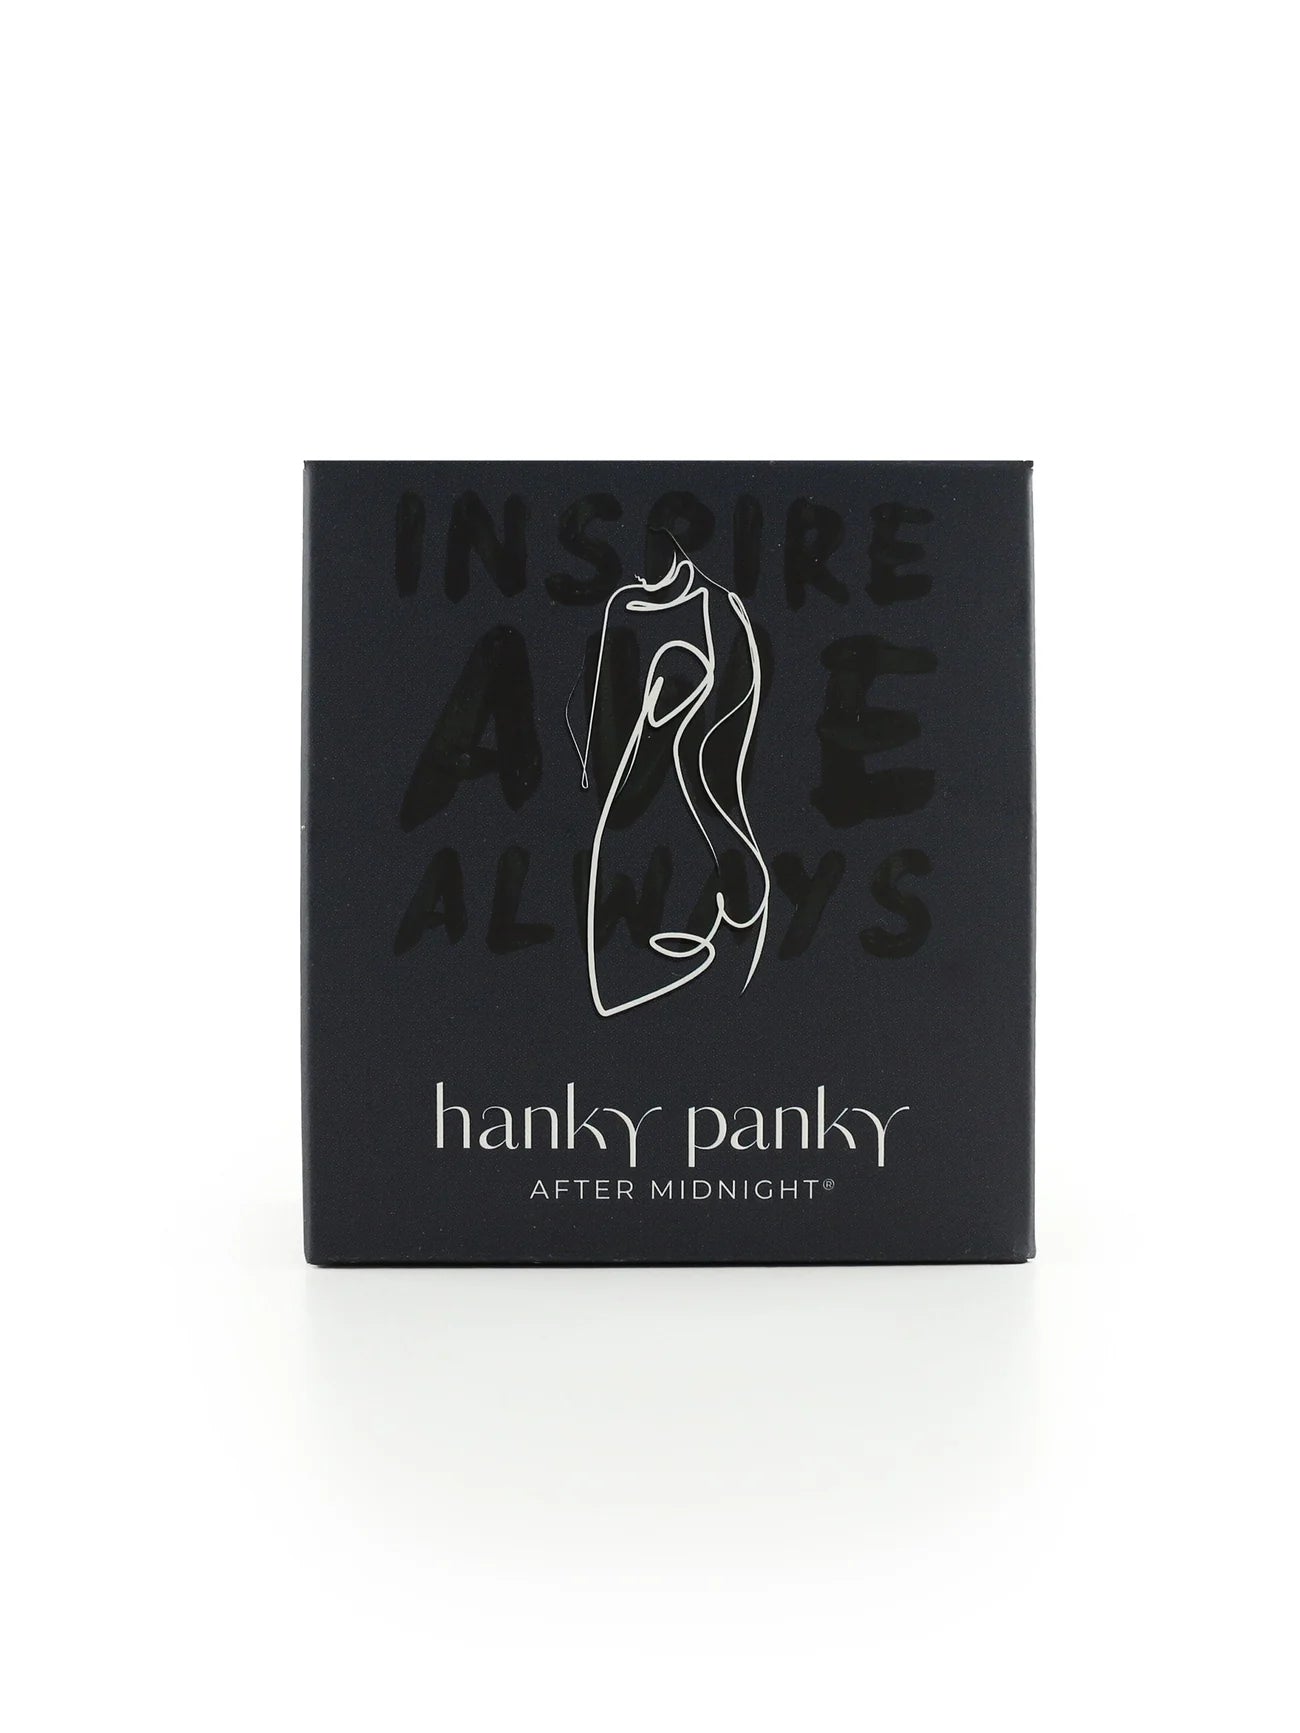 Hanky Panky "Naughty & Nice" Boxed Set